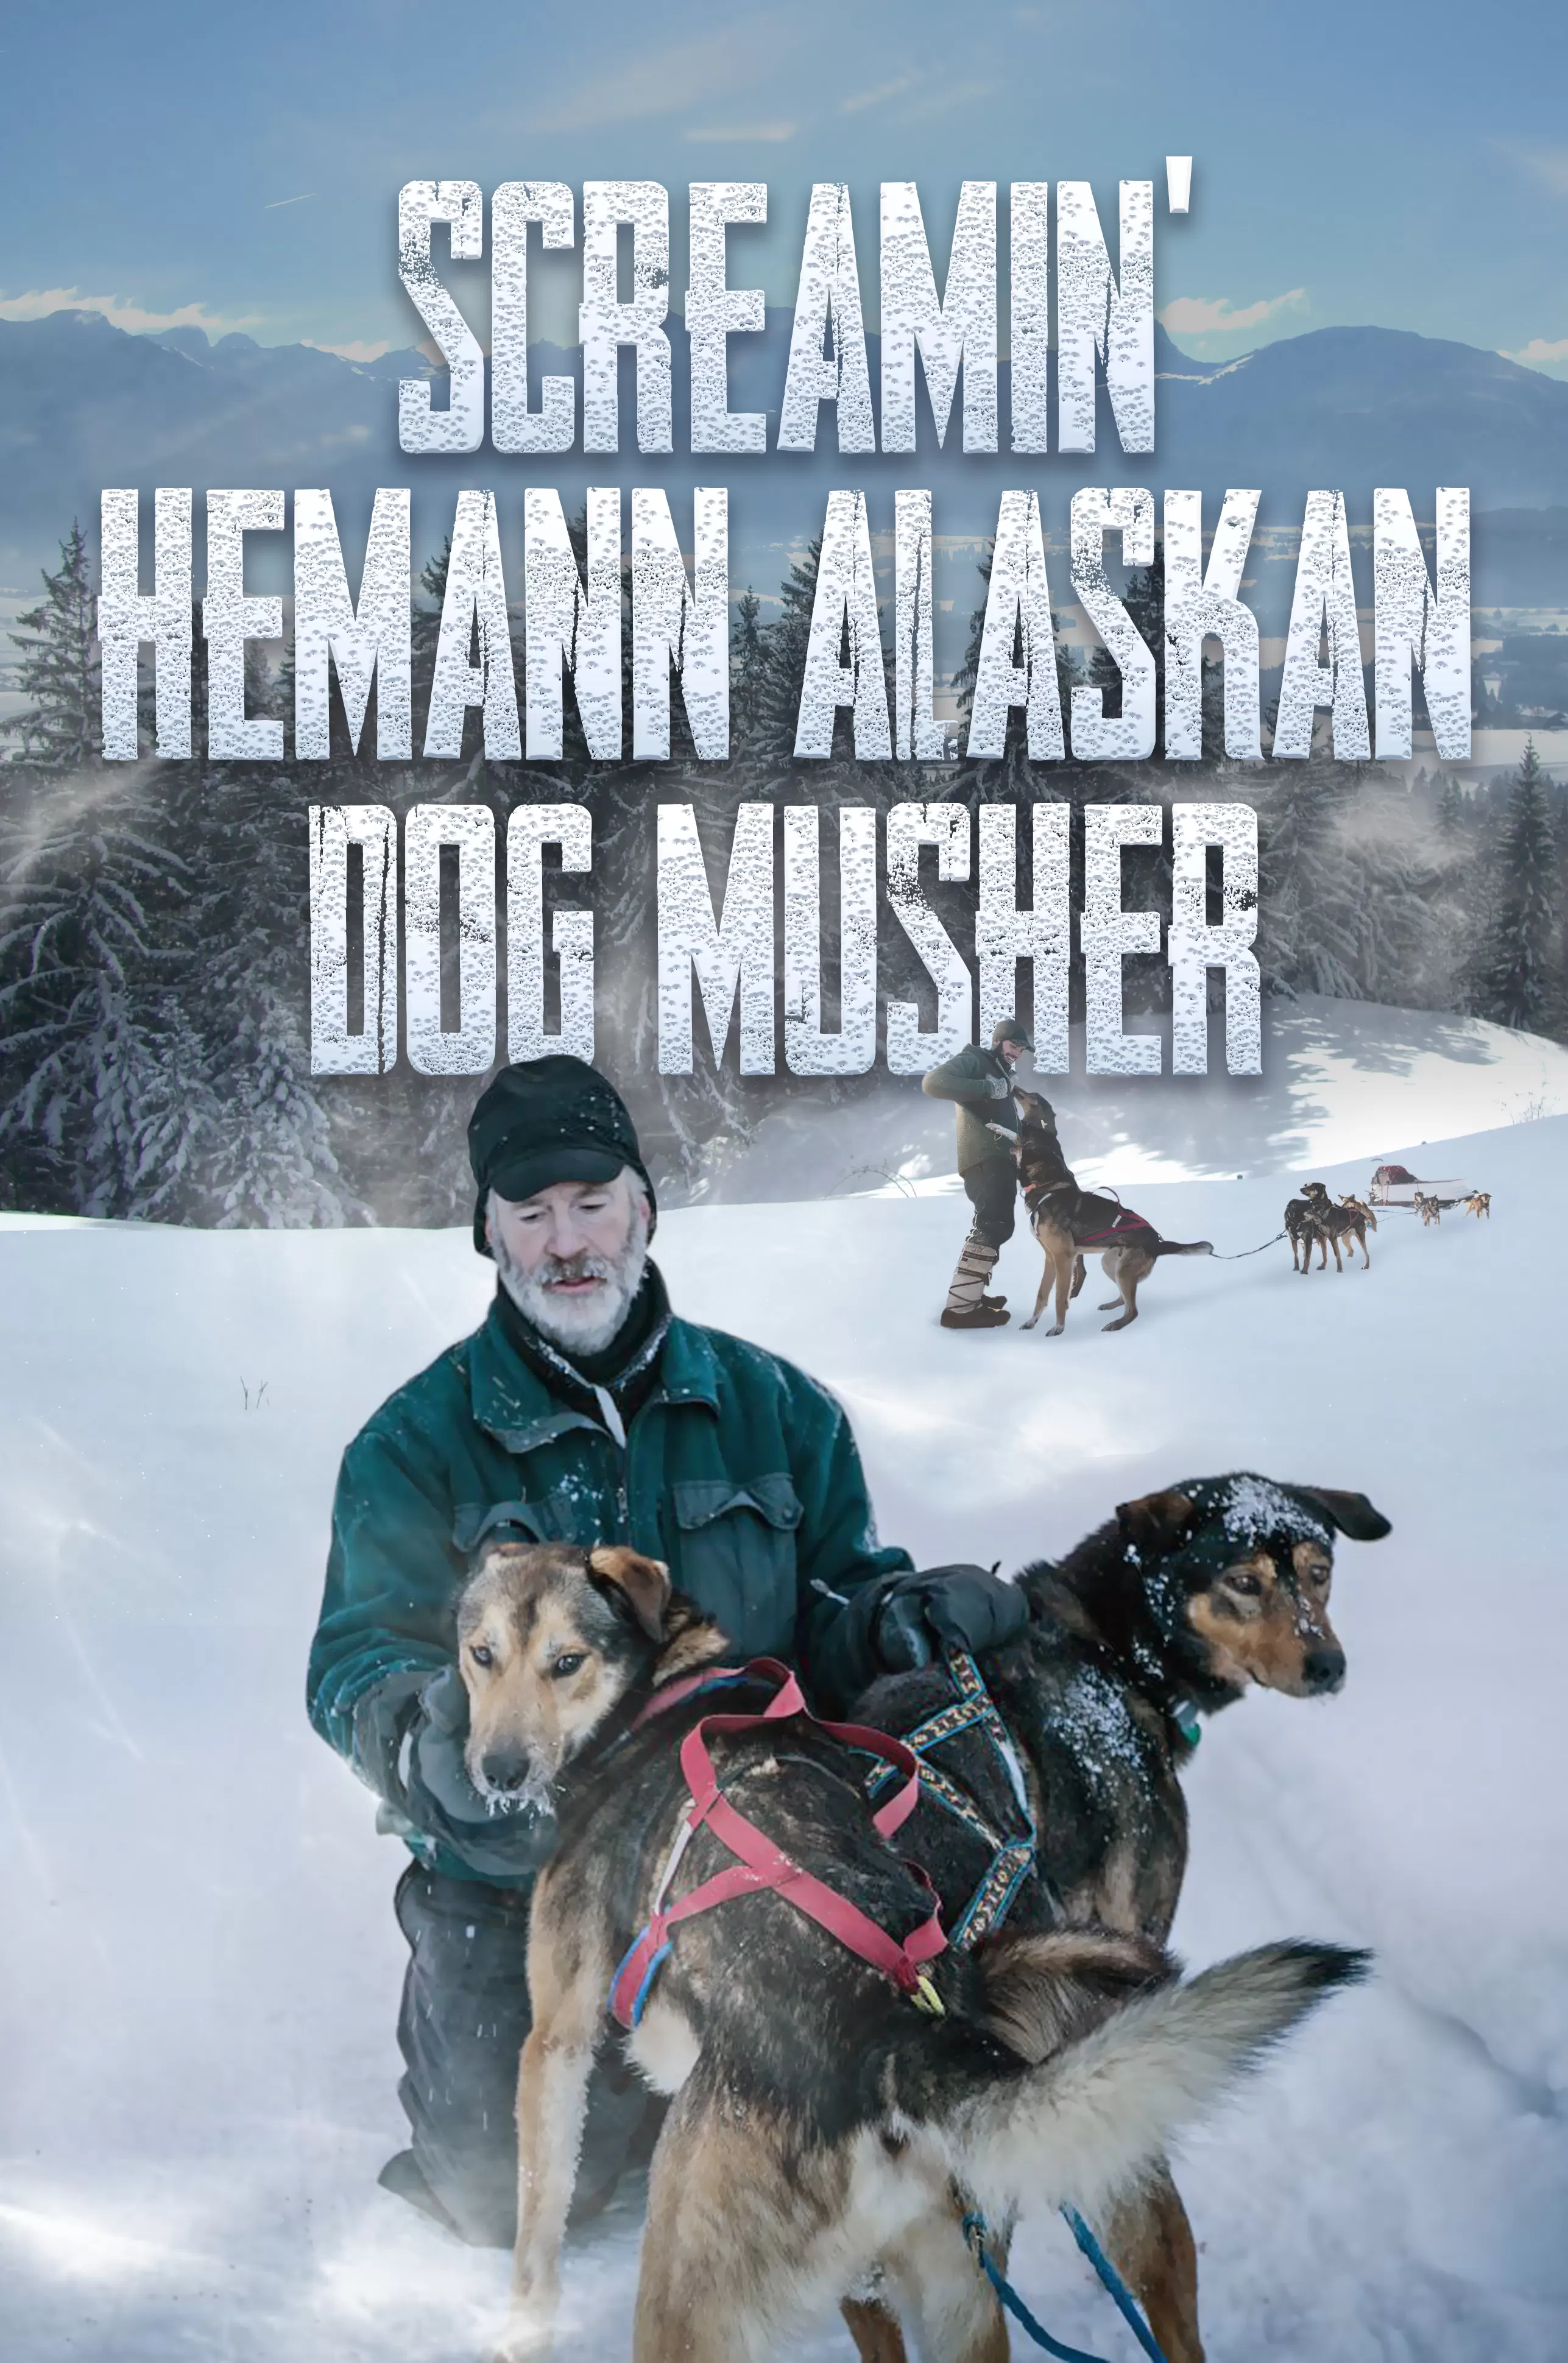 Screamin' Hemann Alaskan Dog Musher